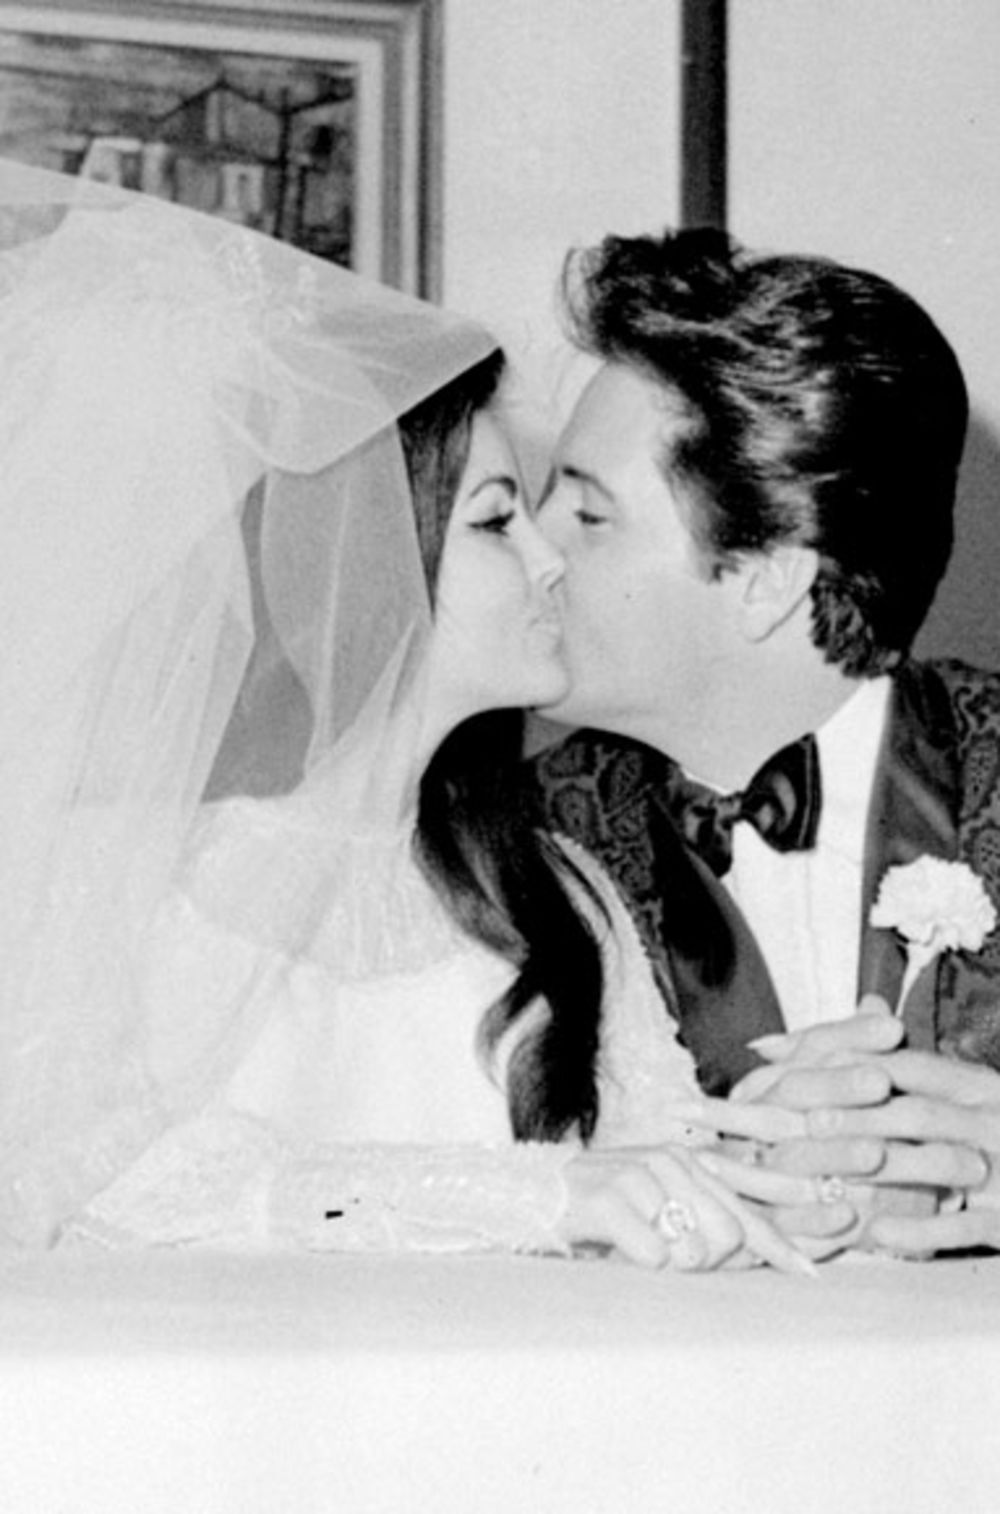 Pogledajte galeriju najromantičnijih poljubaca novopečenih bračnih parova kao što su Lorin Bekol i Hemfri Bogart, Džoan Vudvord i Pol Njumen, Džon F. Kenedi i Kerolin Beset, Merilin Monro i Džo di Mađo, Elvis i Prisila Prisli, Elizabet Tejlor i Ričard Barton,